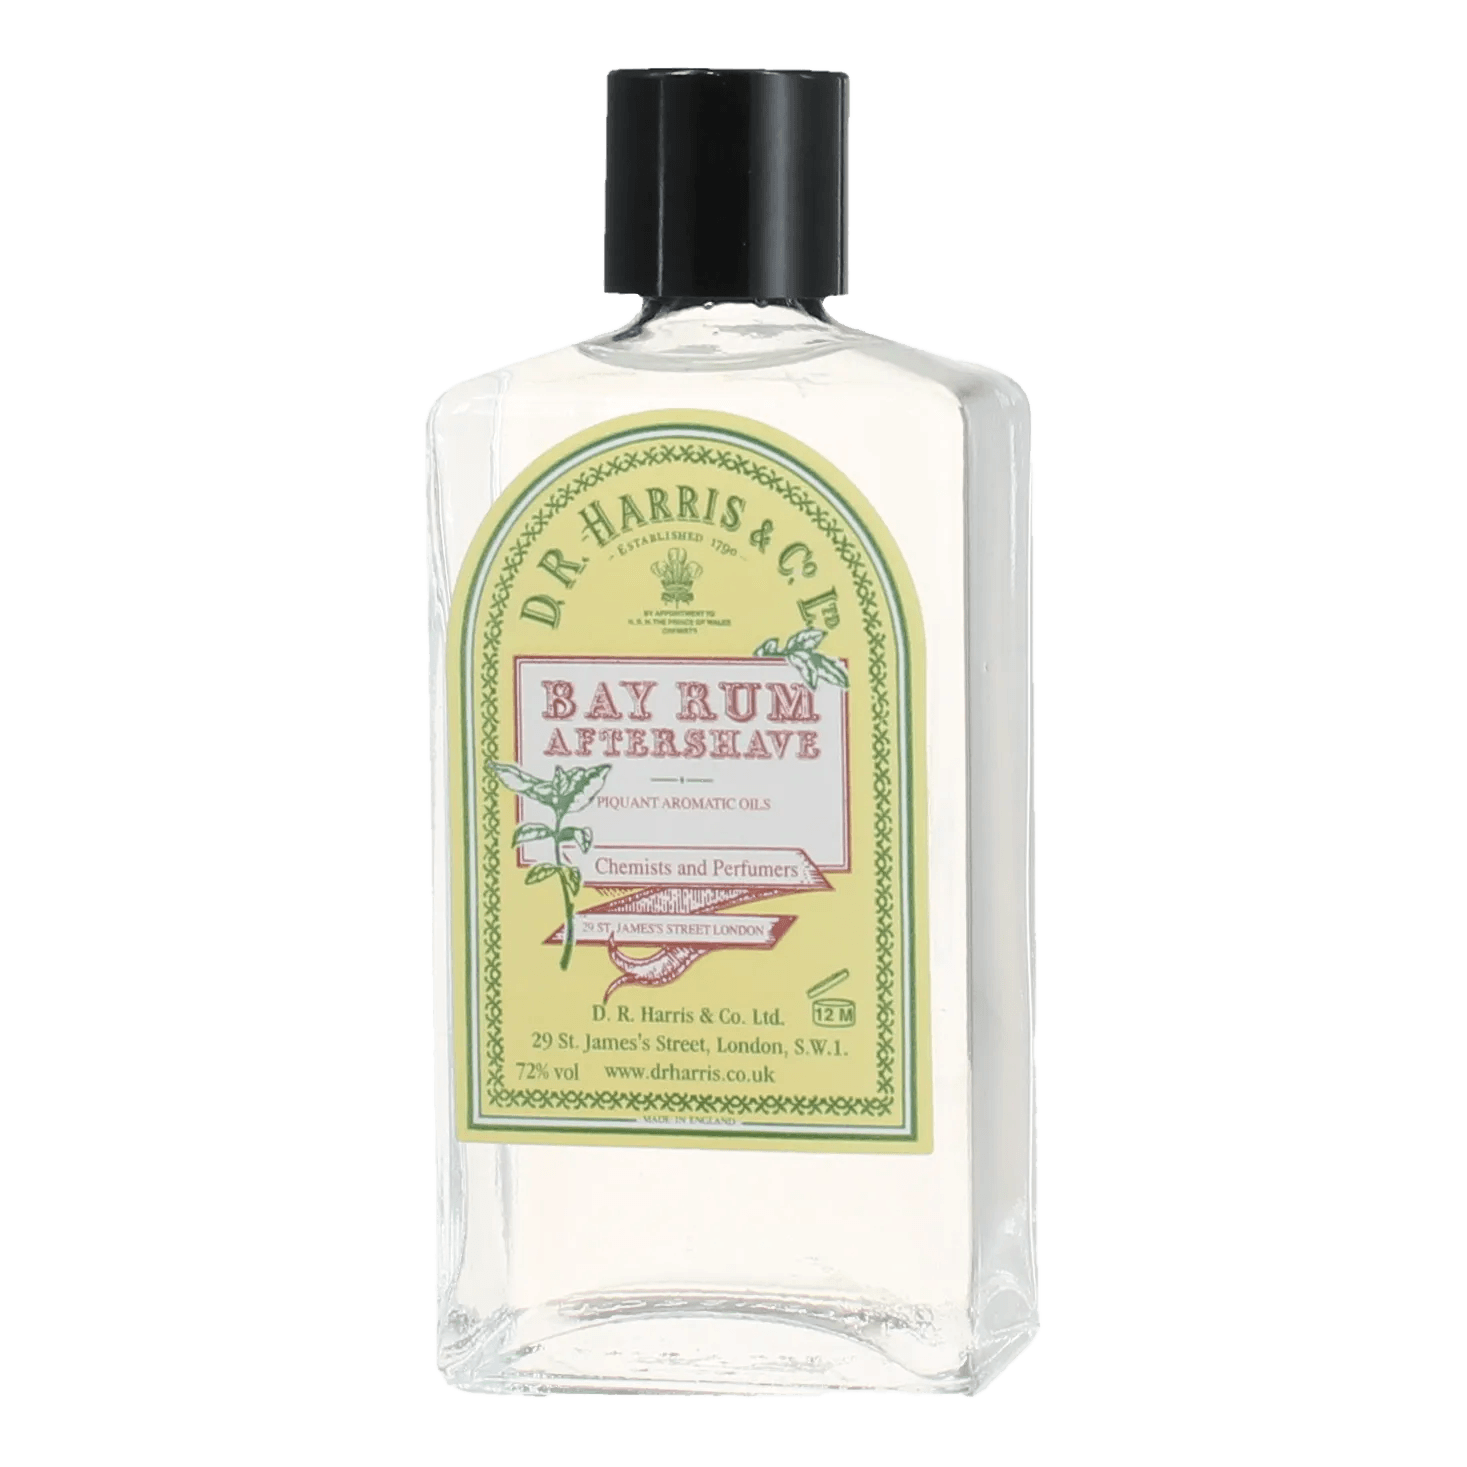 D. R. Harris Aftershave - Bay Rum